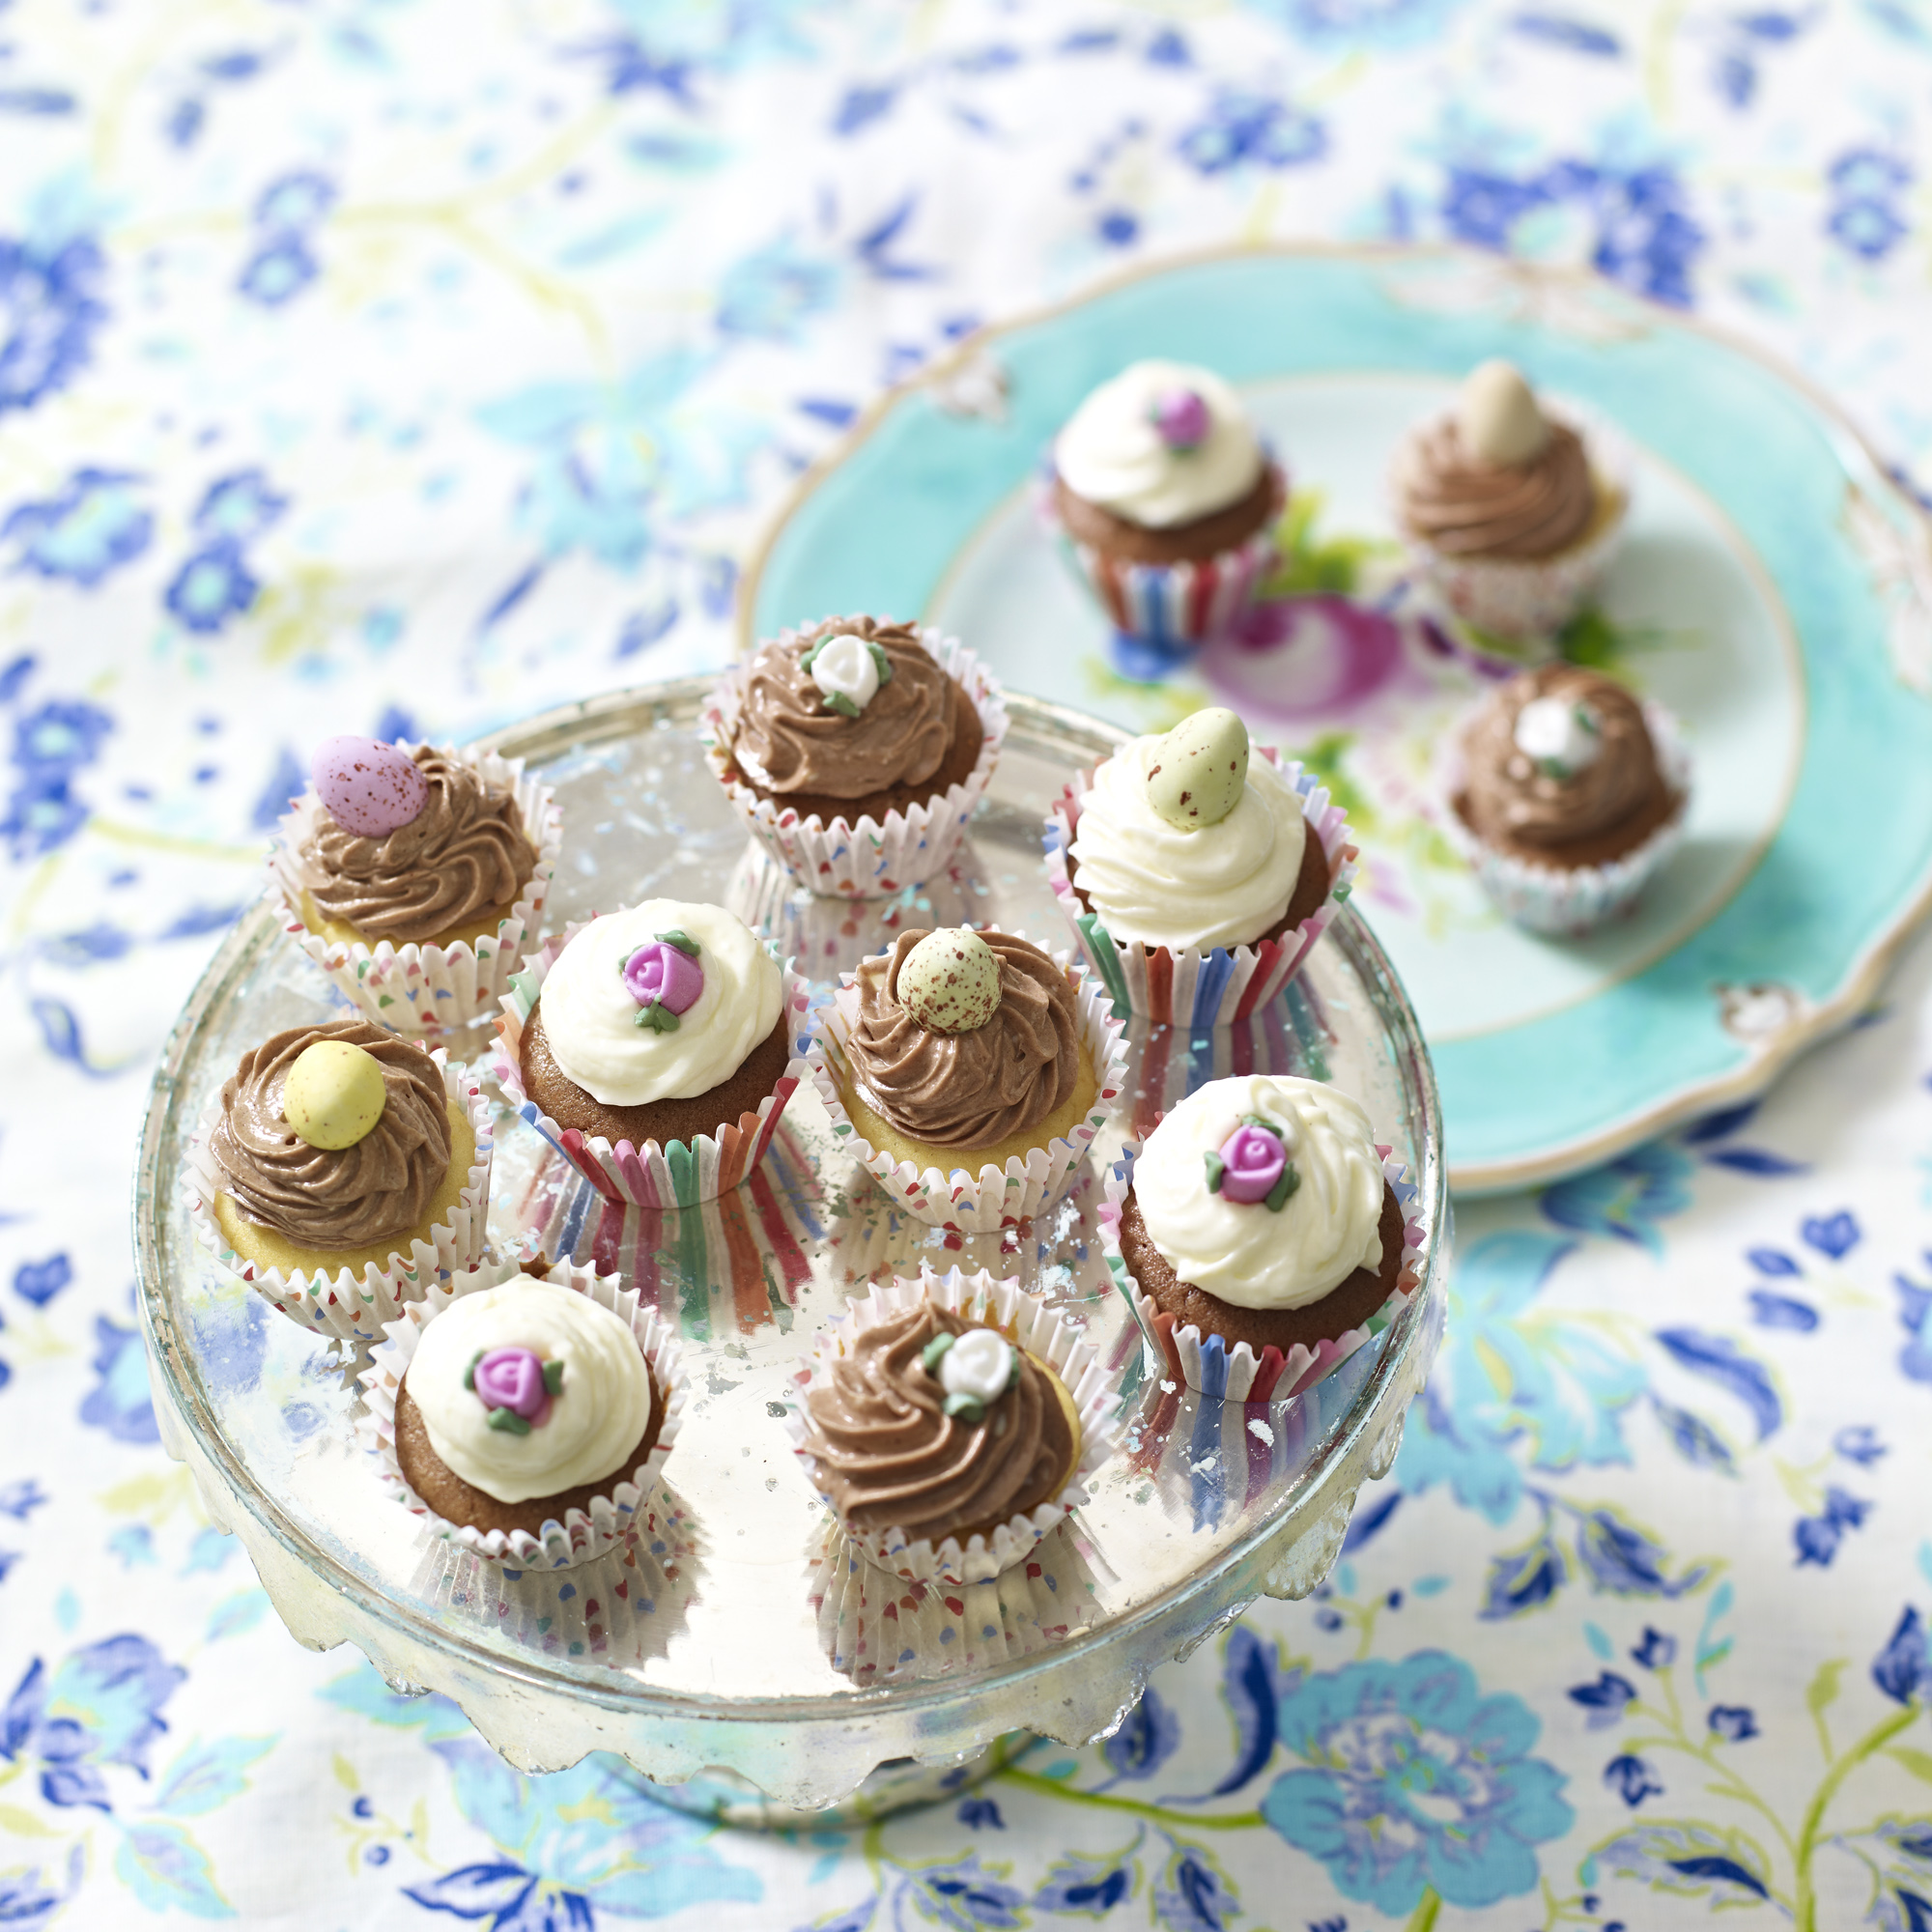 Regency cupcakes - Queen cakes recipe - Great British Chefs